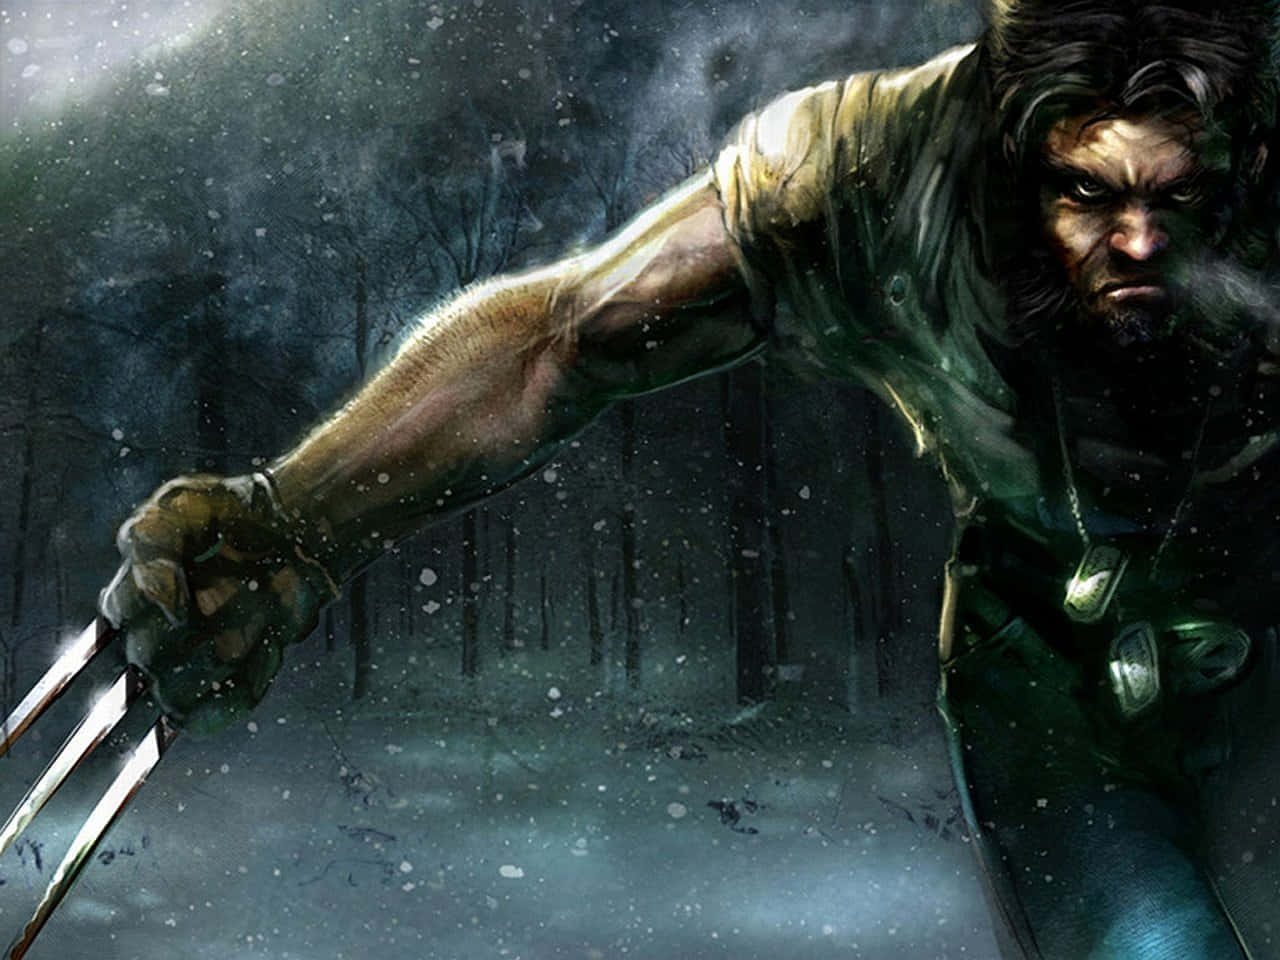 Wolverine, a Powerful Mutant Superhero